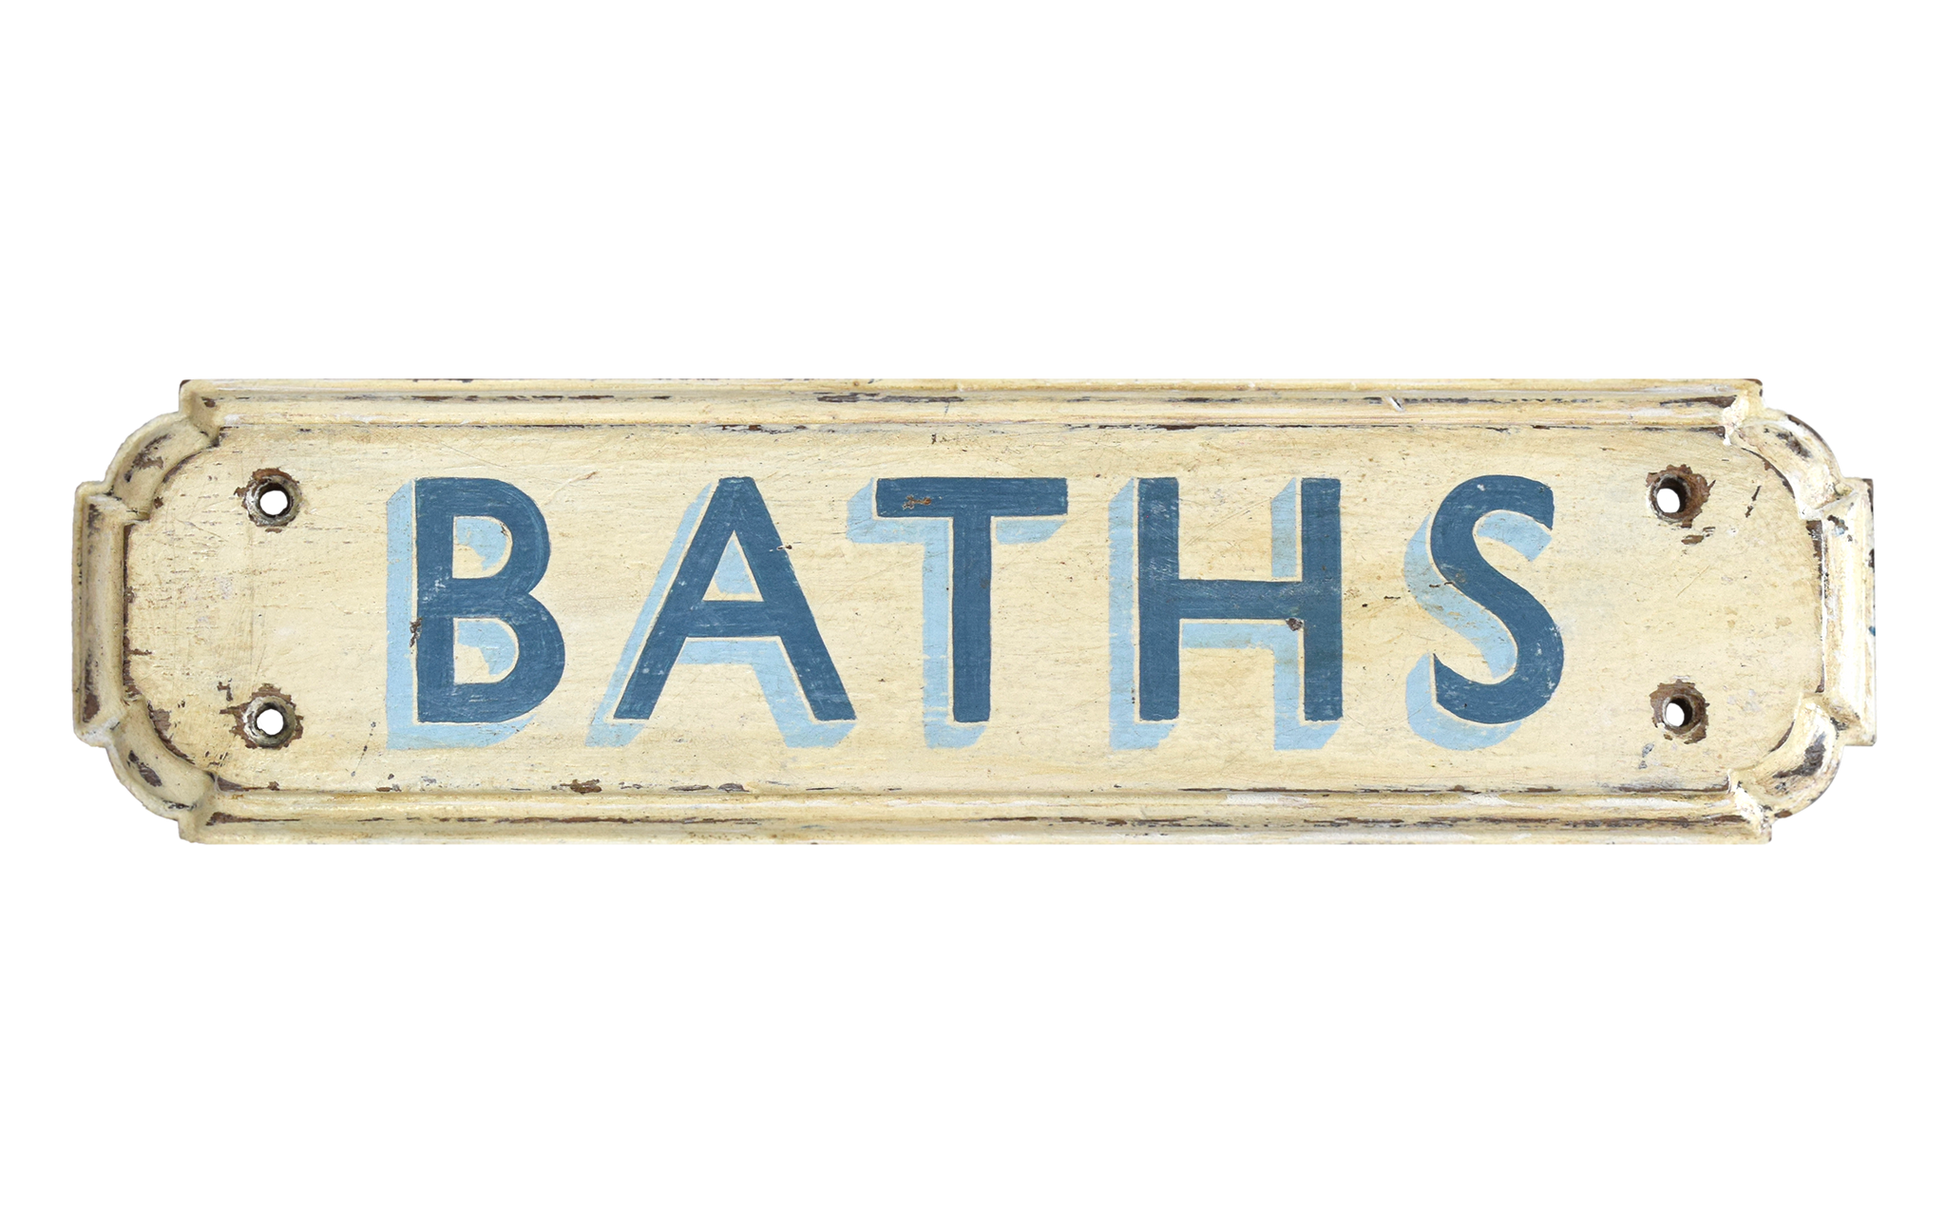 Vintage Painted Wooden Bathroom Door Sign: Baths